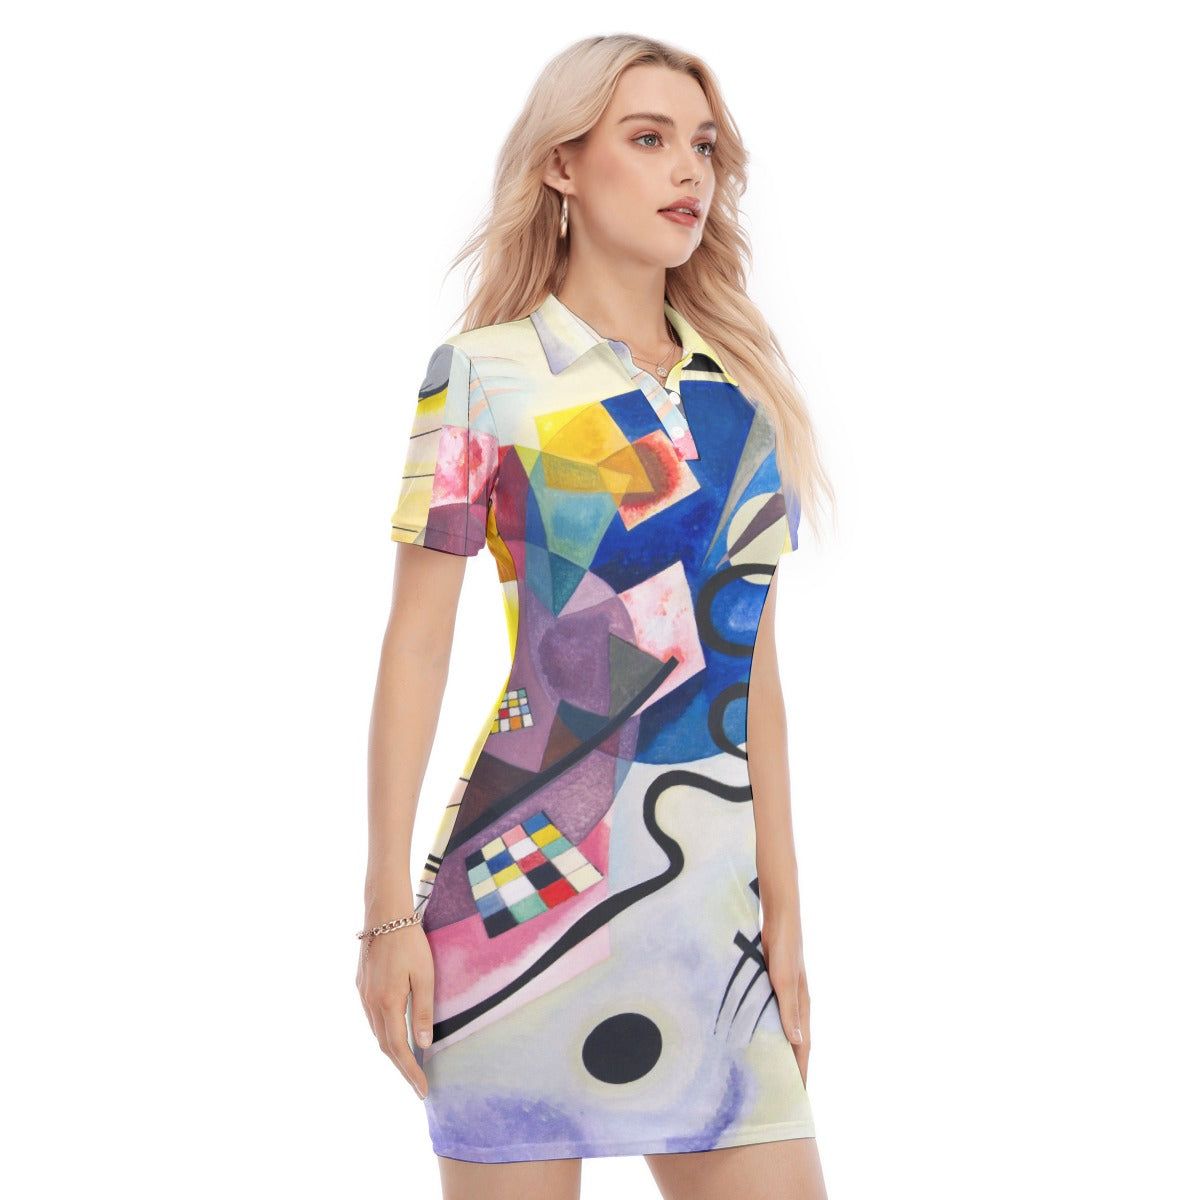 Unique Designer Clothing Inspired by Kandinsky